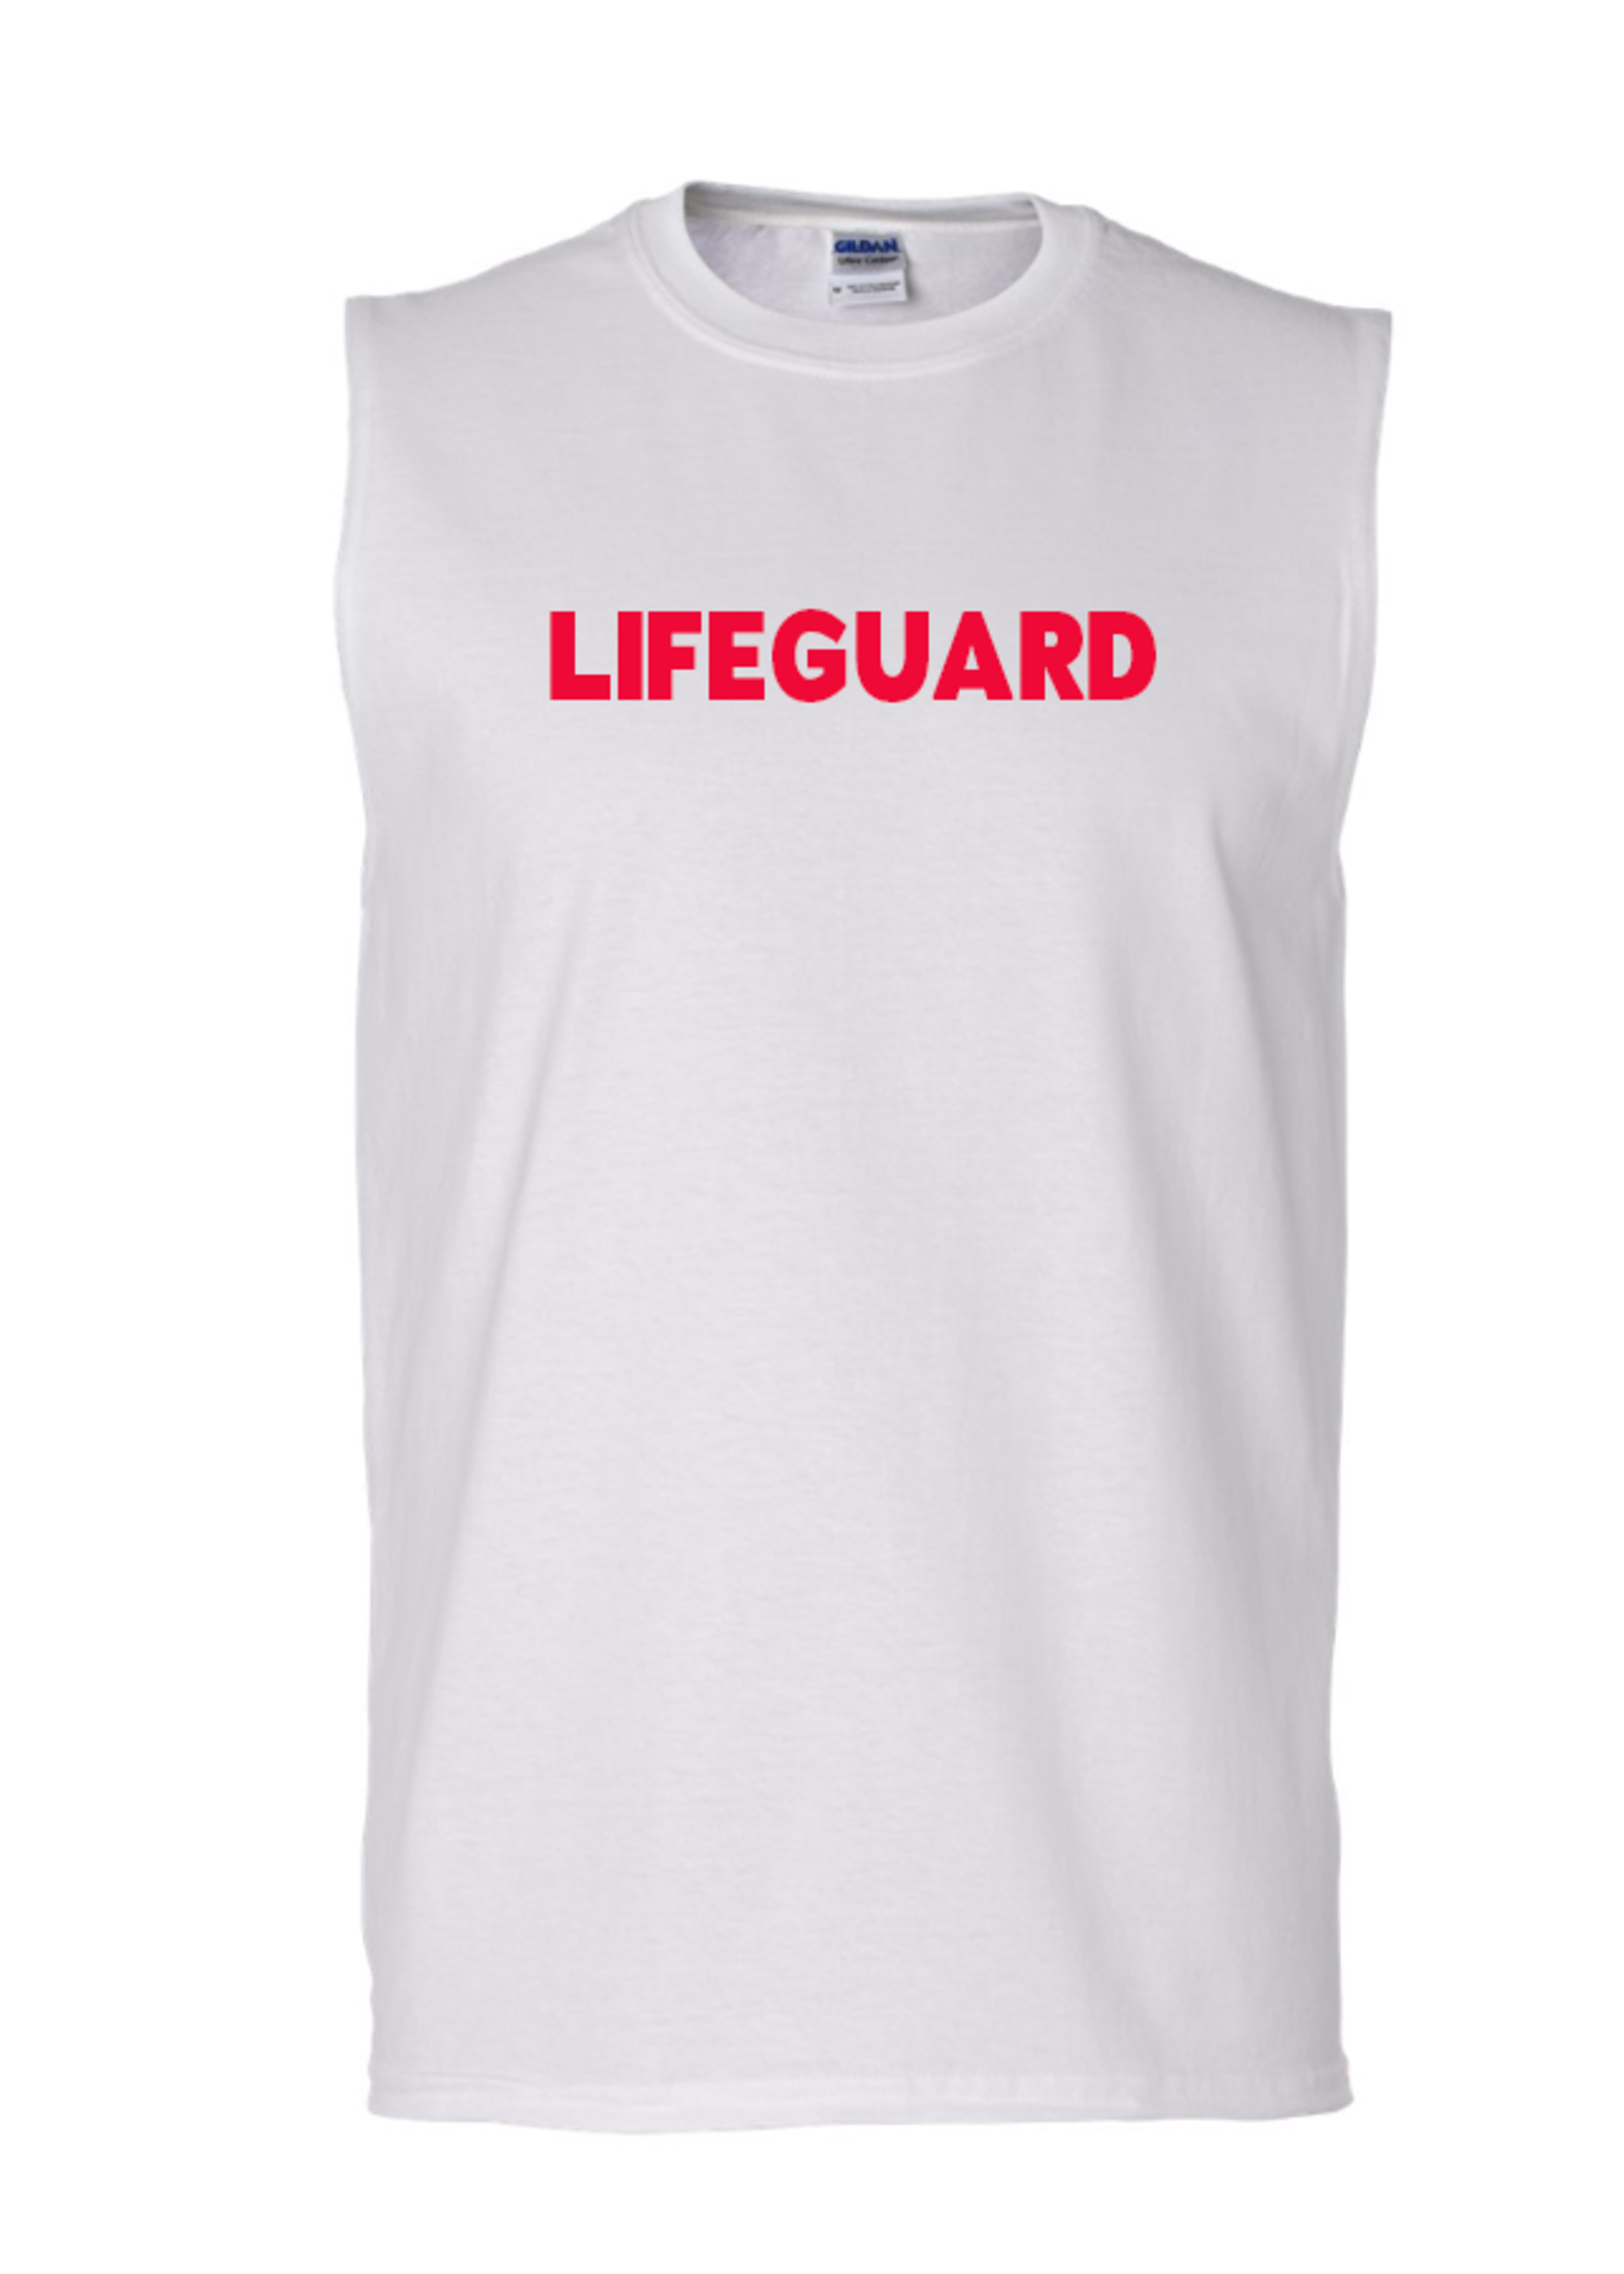 AO Lifeguard Sleeveless White